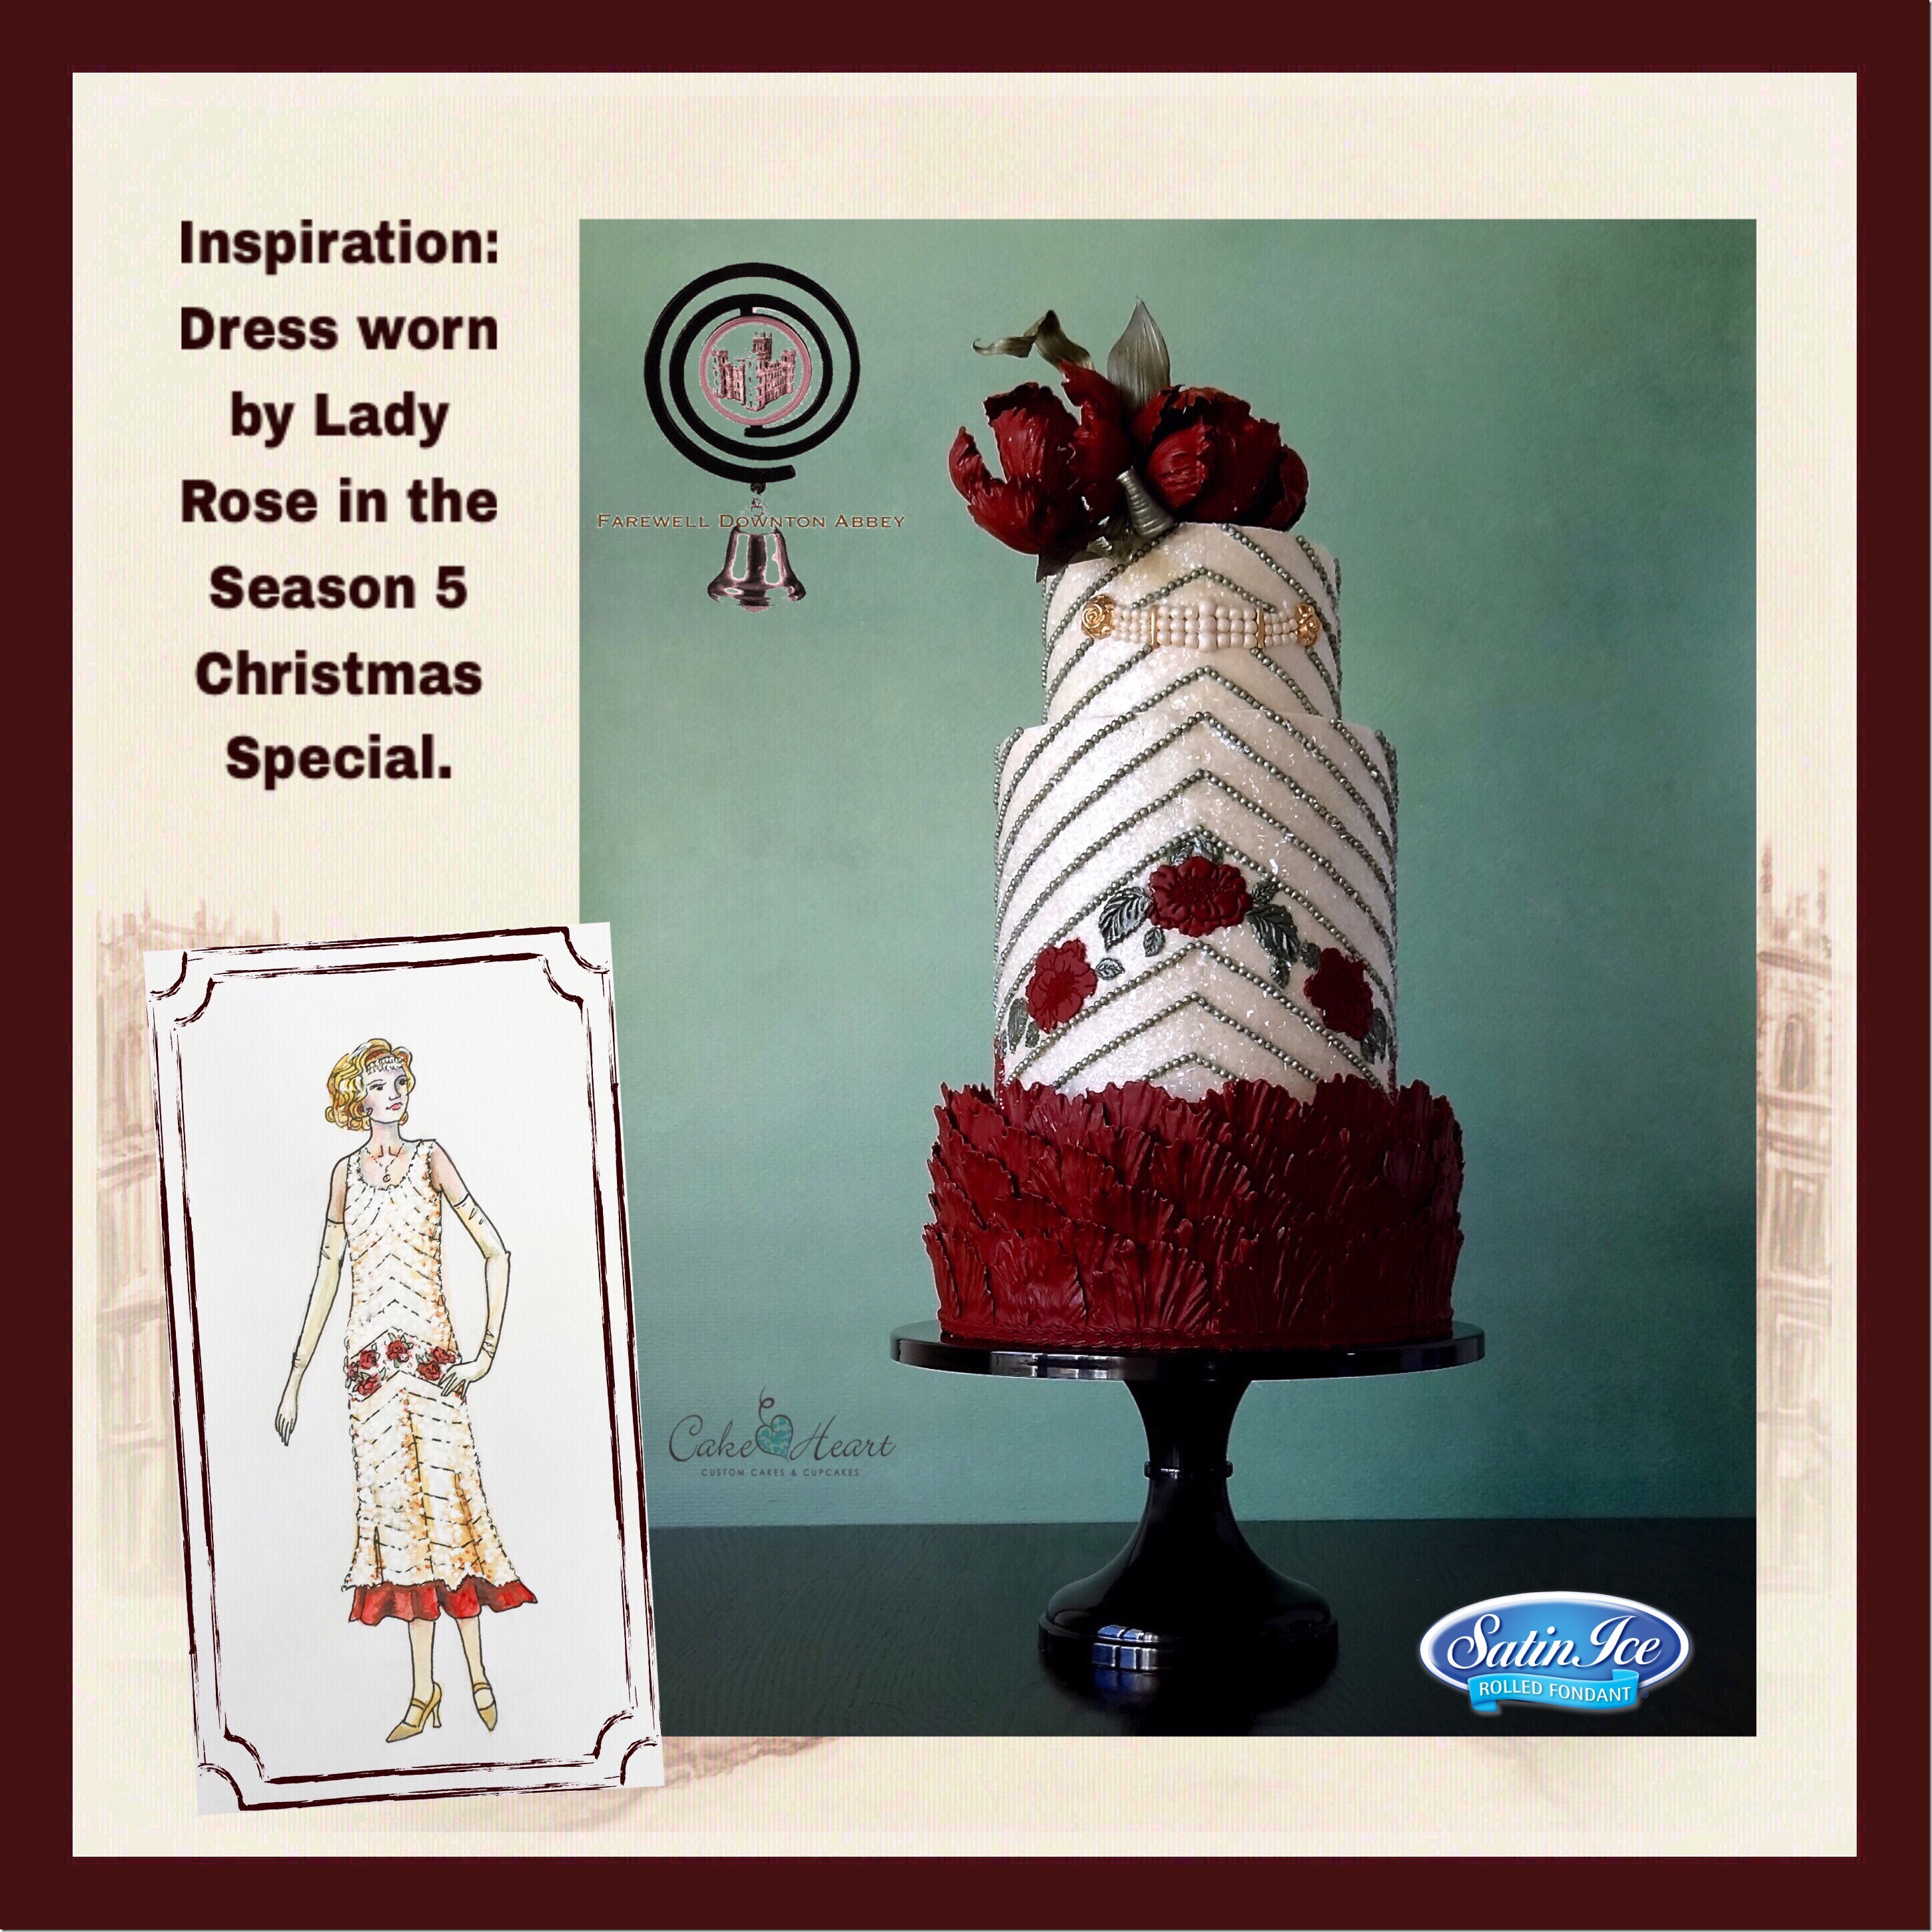 Downton Abbey Cake Based On Lady Rose’s Christmas Dress